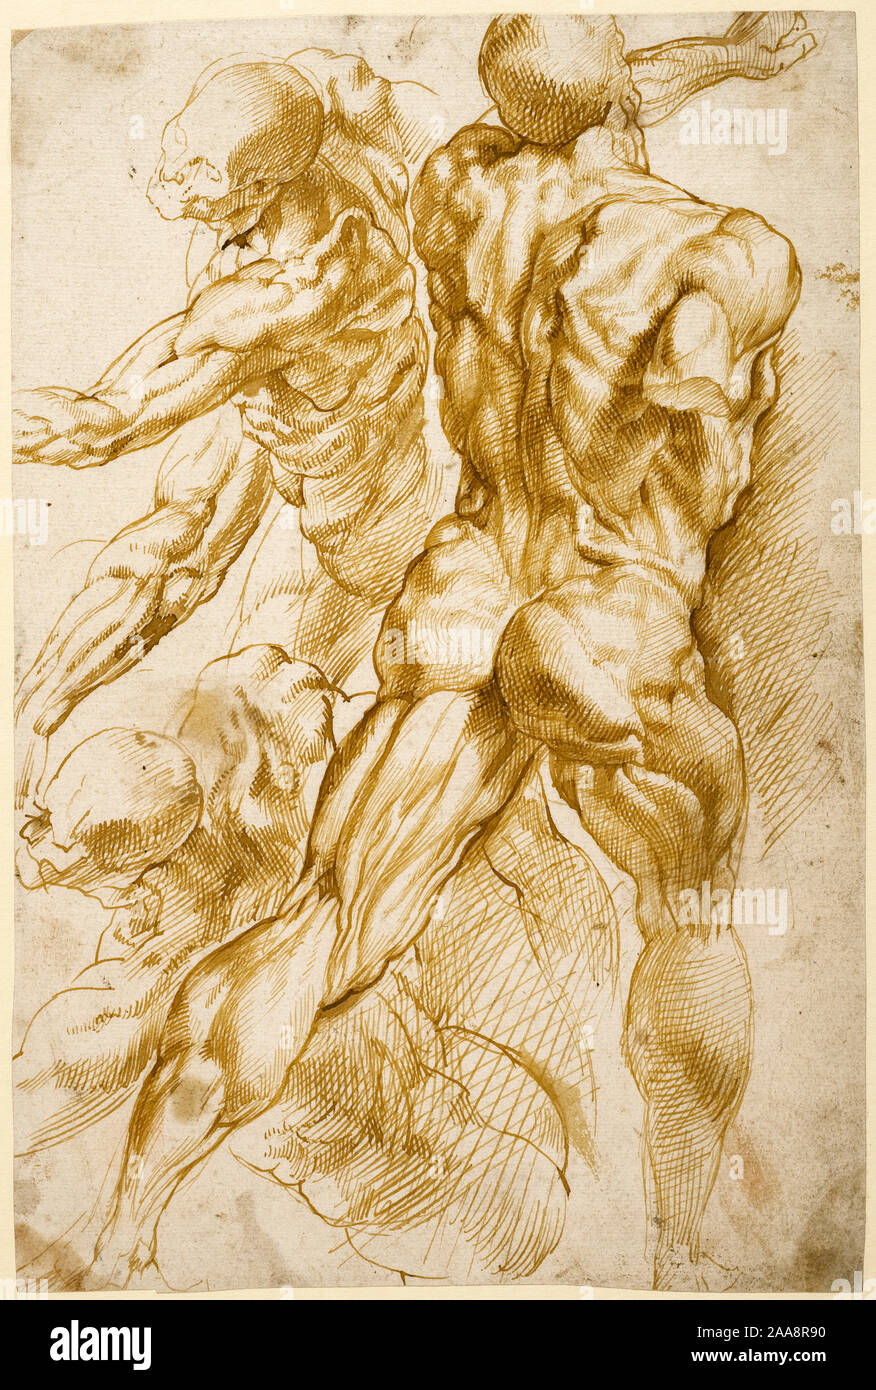 Peter Paul Rubens, Anatomical Studies, drawing, 1600-1605 Stock Photo